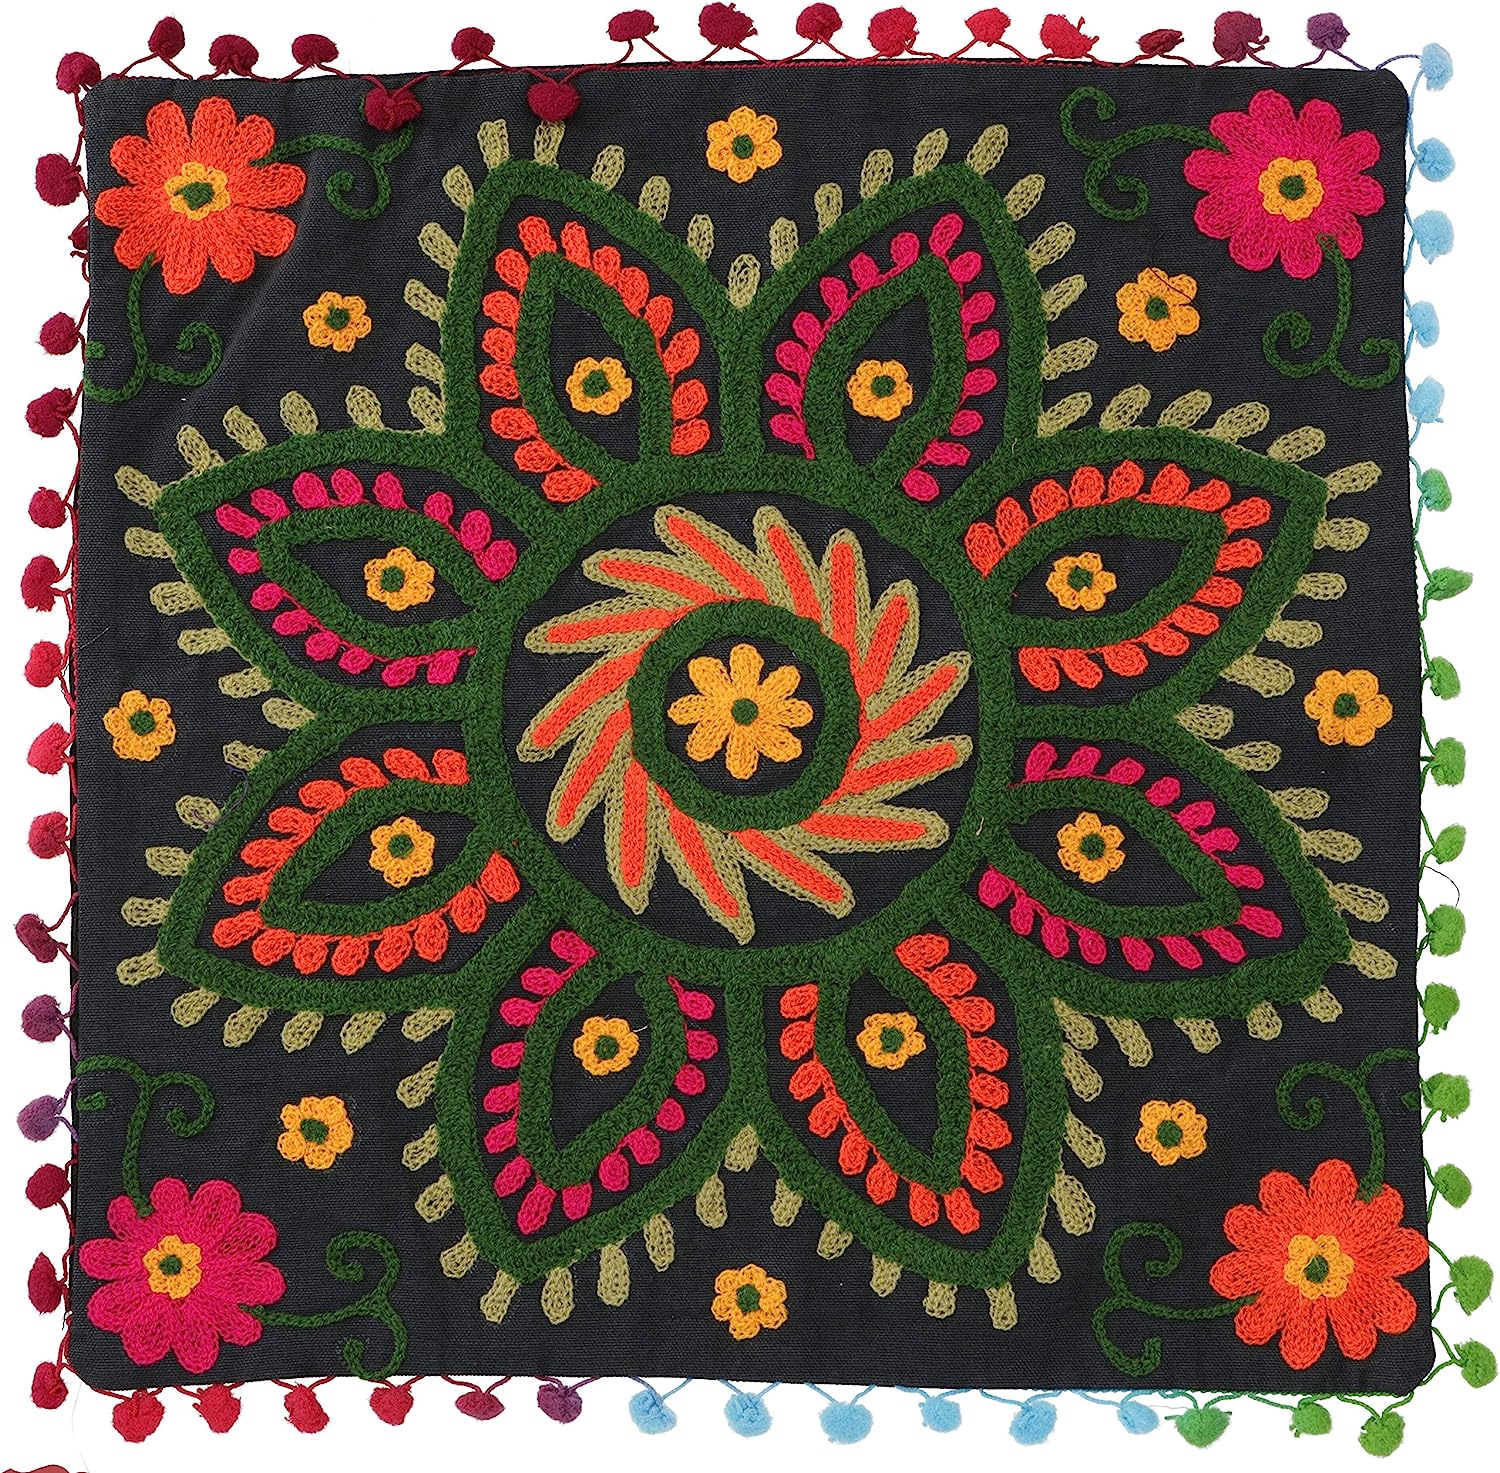 GURU SHOP Boho Cushion Cover, Colourful Embroidered Folklore Cushion in Mexican Style - Black/Orange, Cotton, 40 x 40 cm, Decorative Cushion, Sofa Cushion